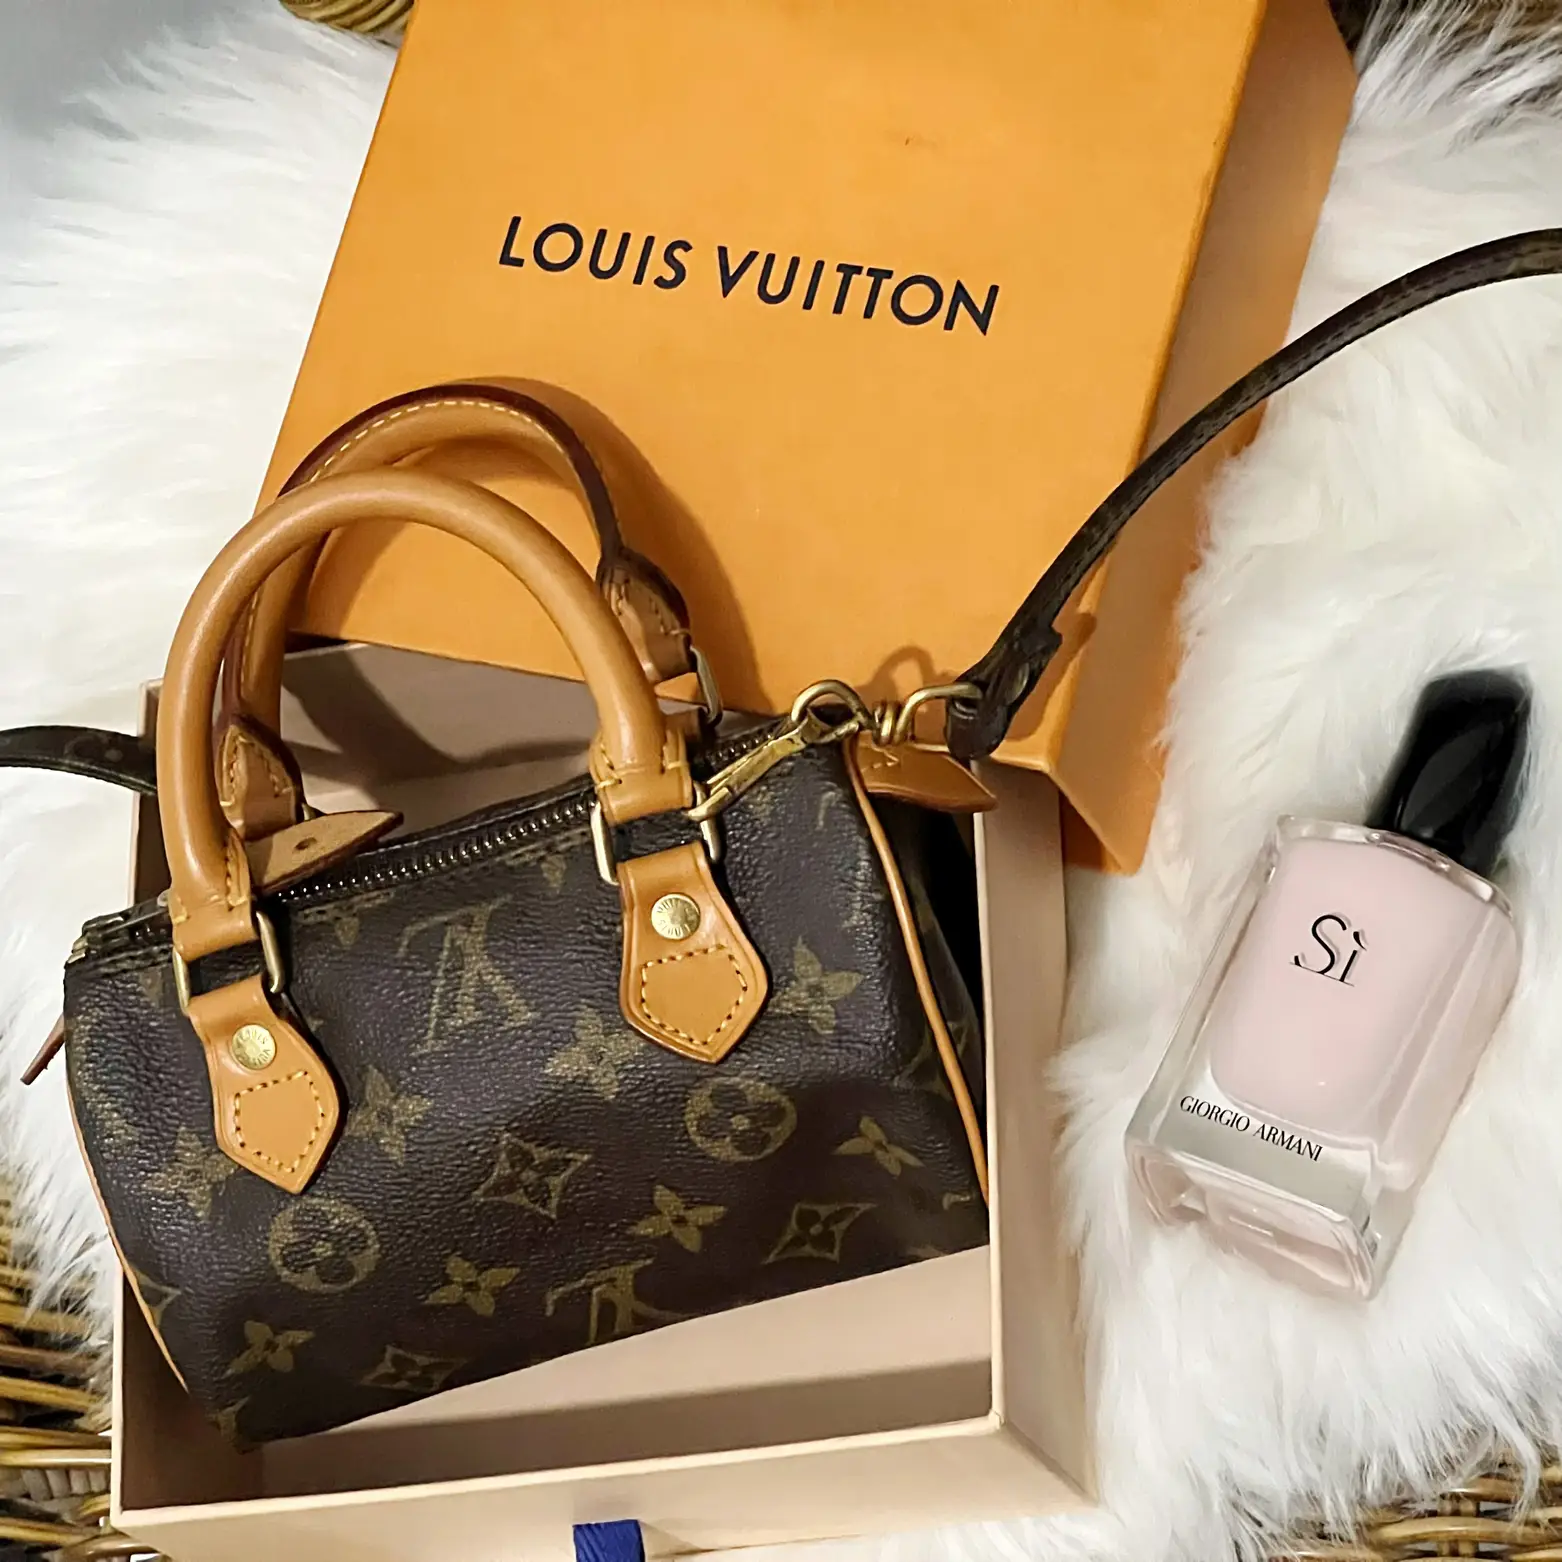 Louis Vuitton Nano Speedy / Mini Hl Leather Handbag In Beige